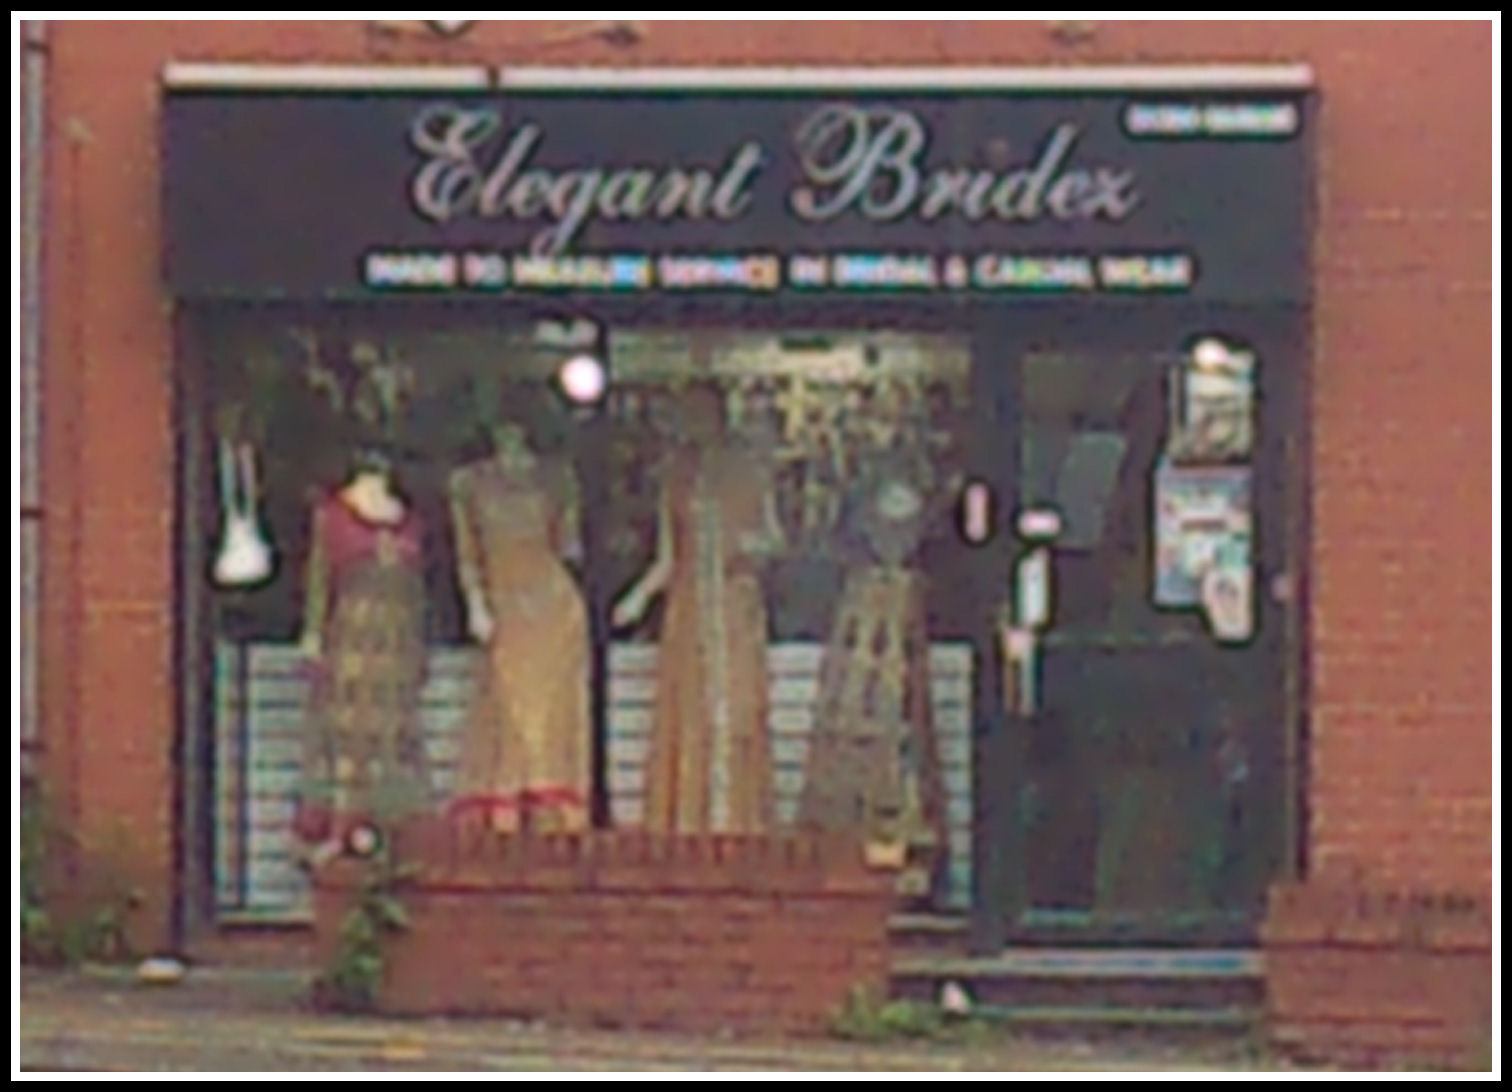 Elegant Bridez, 318 Derby St, Bolton, BL3